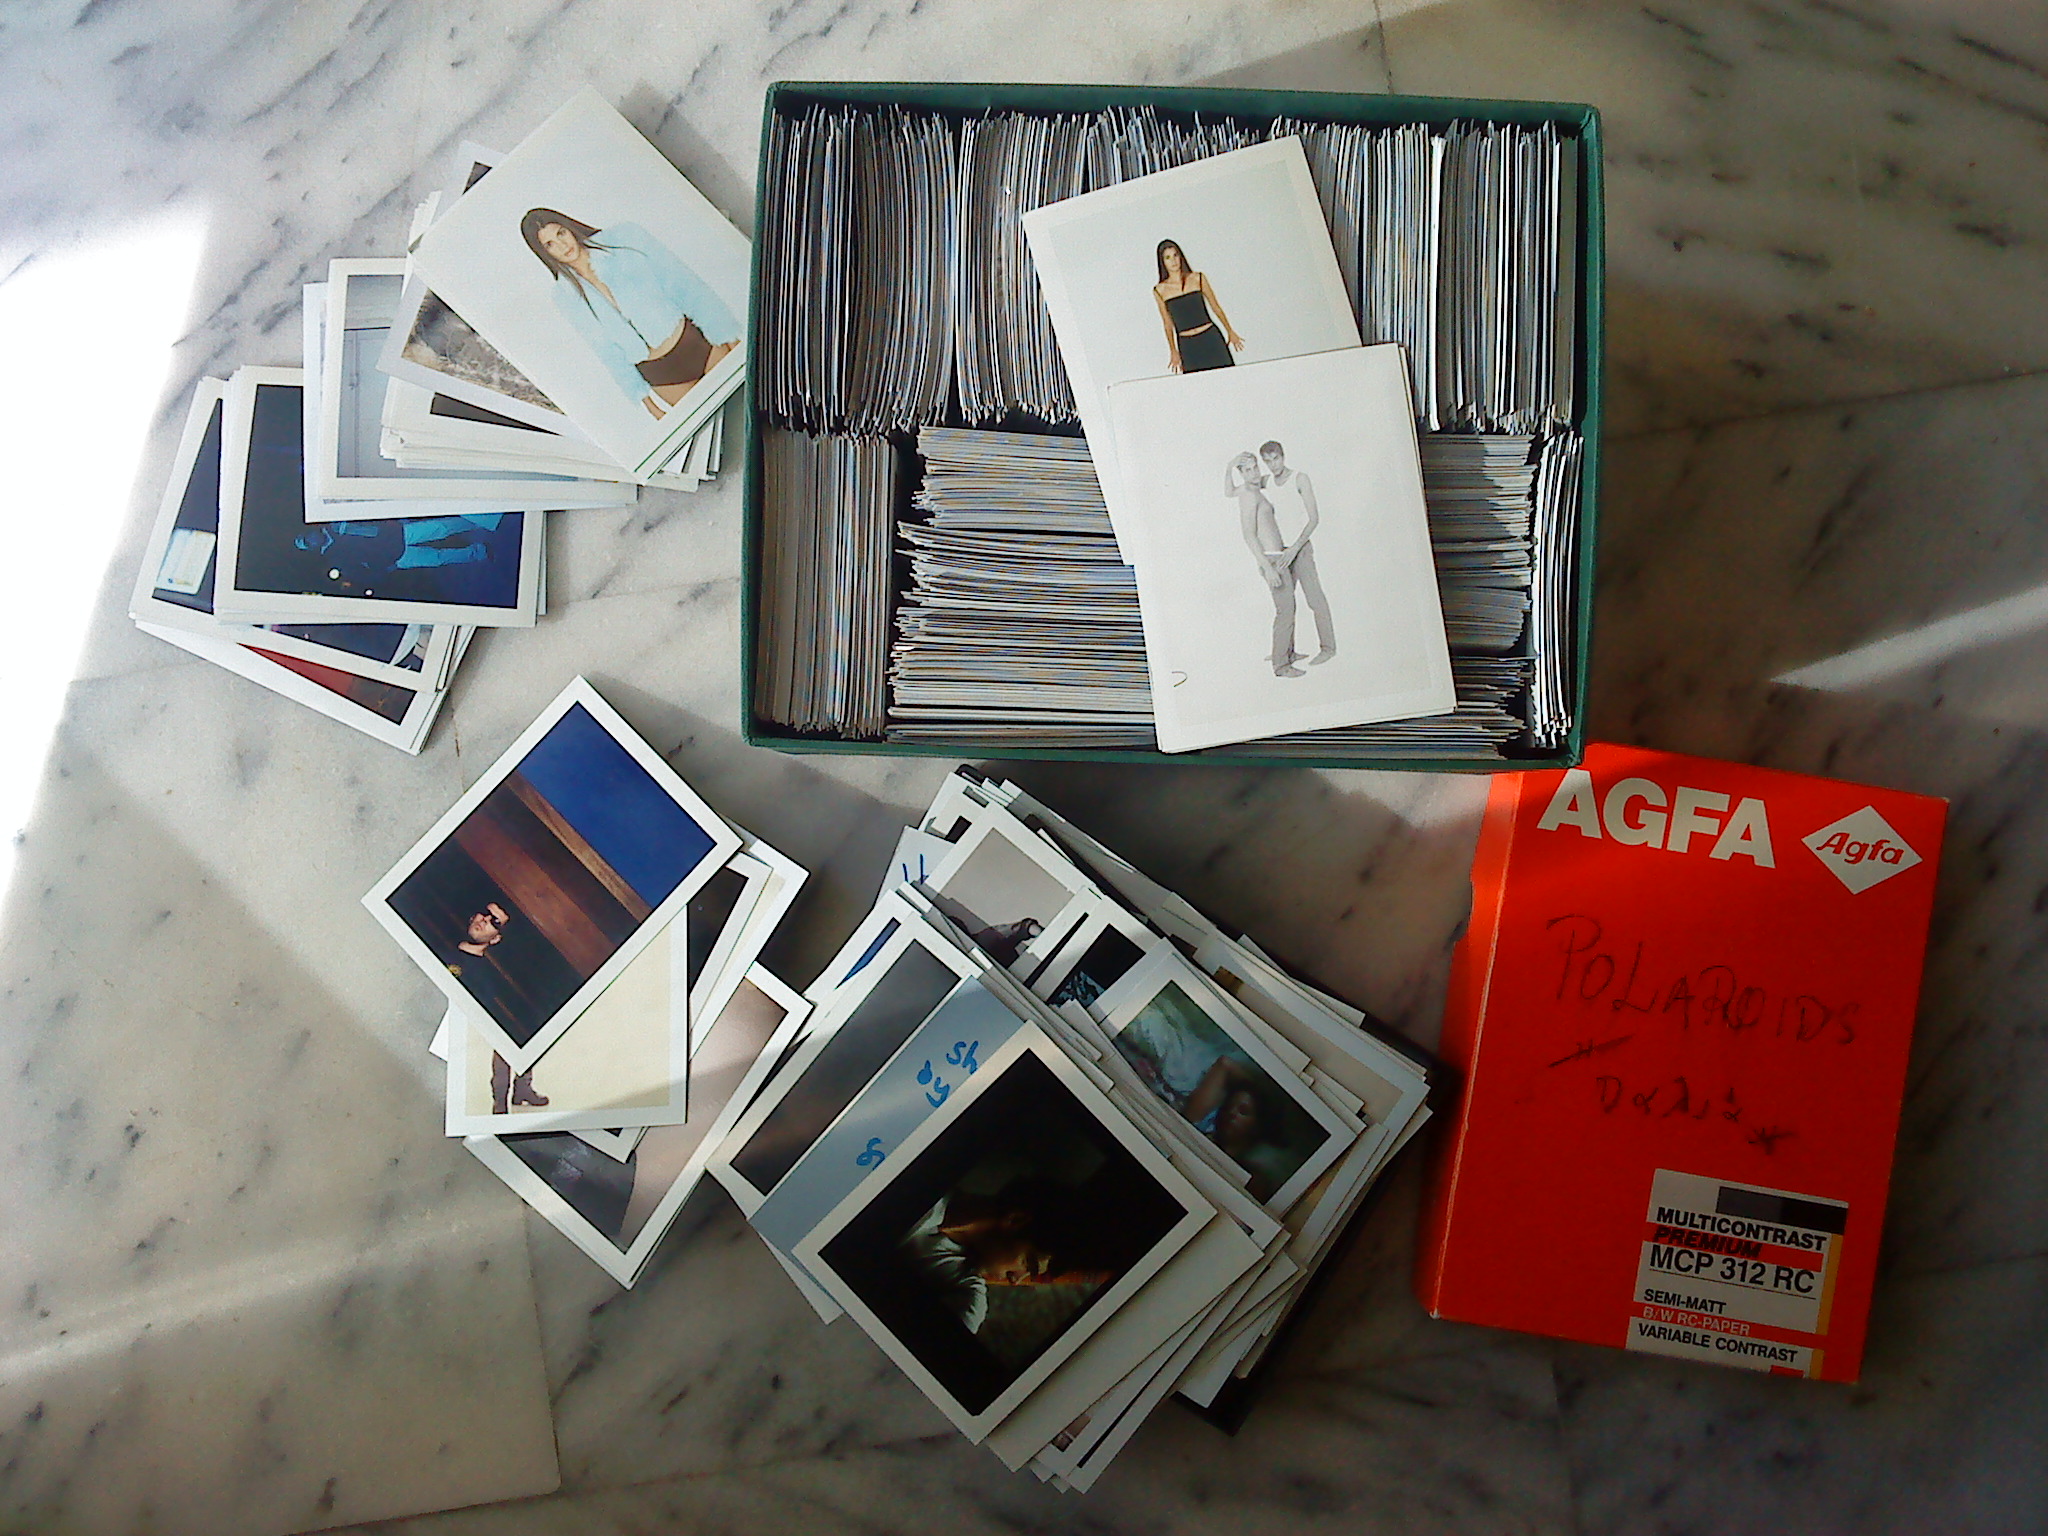 2009: 15 Jahre Polaroid-Flashback